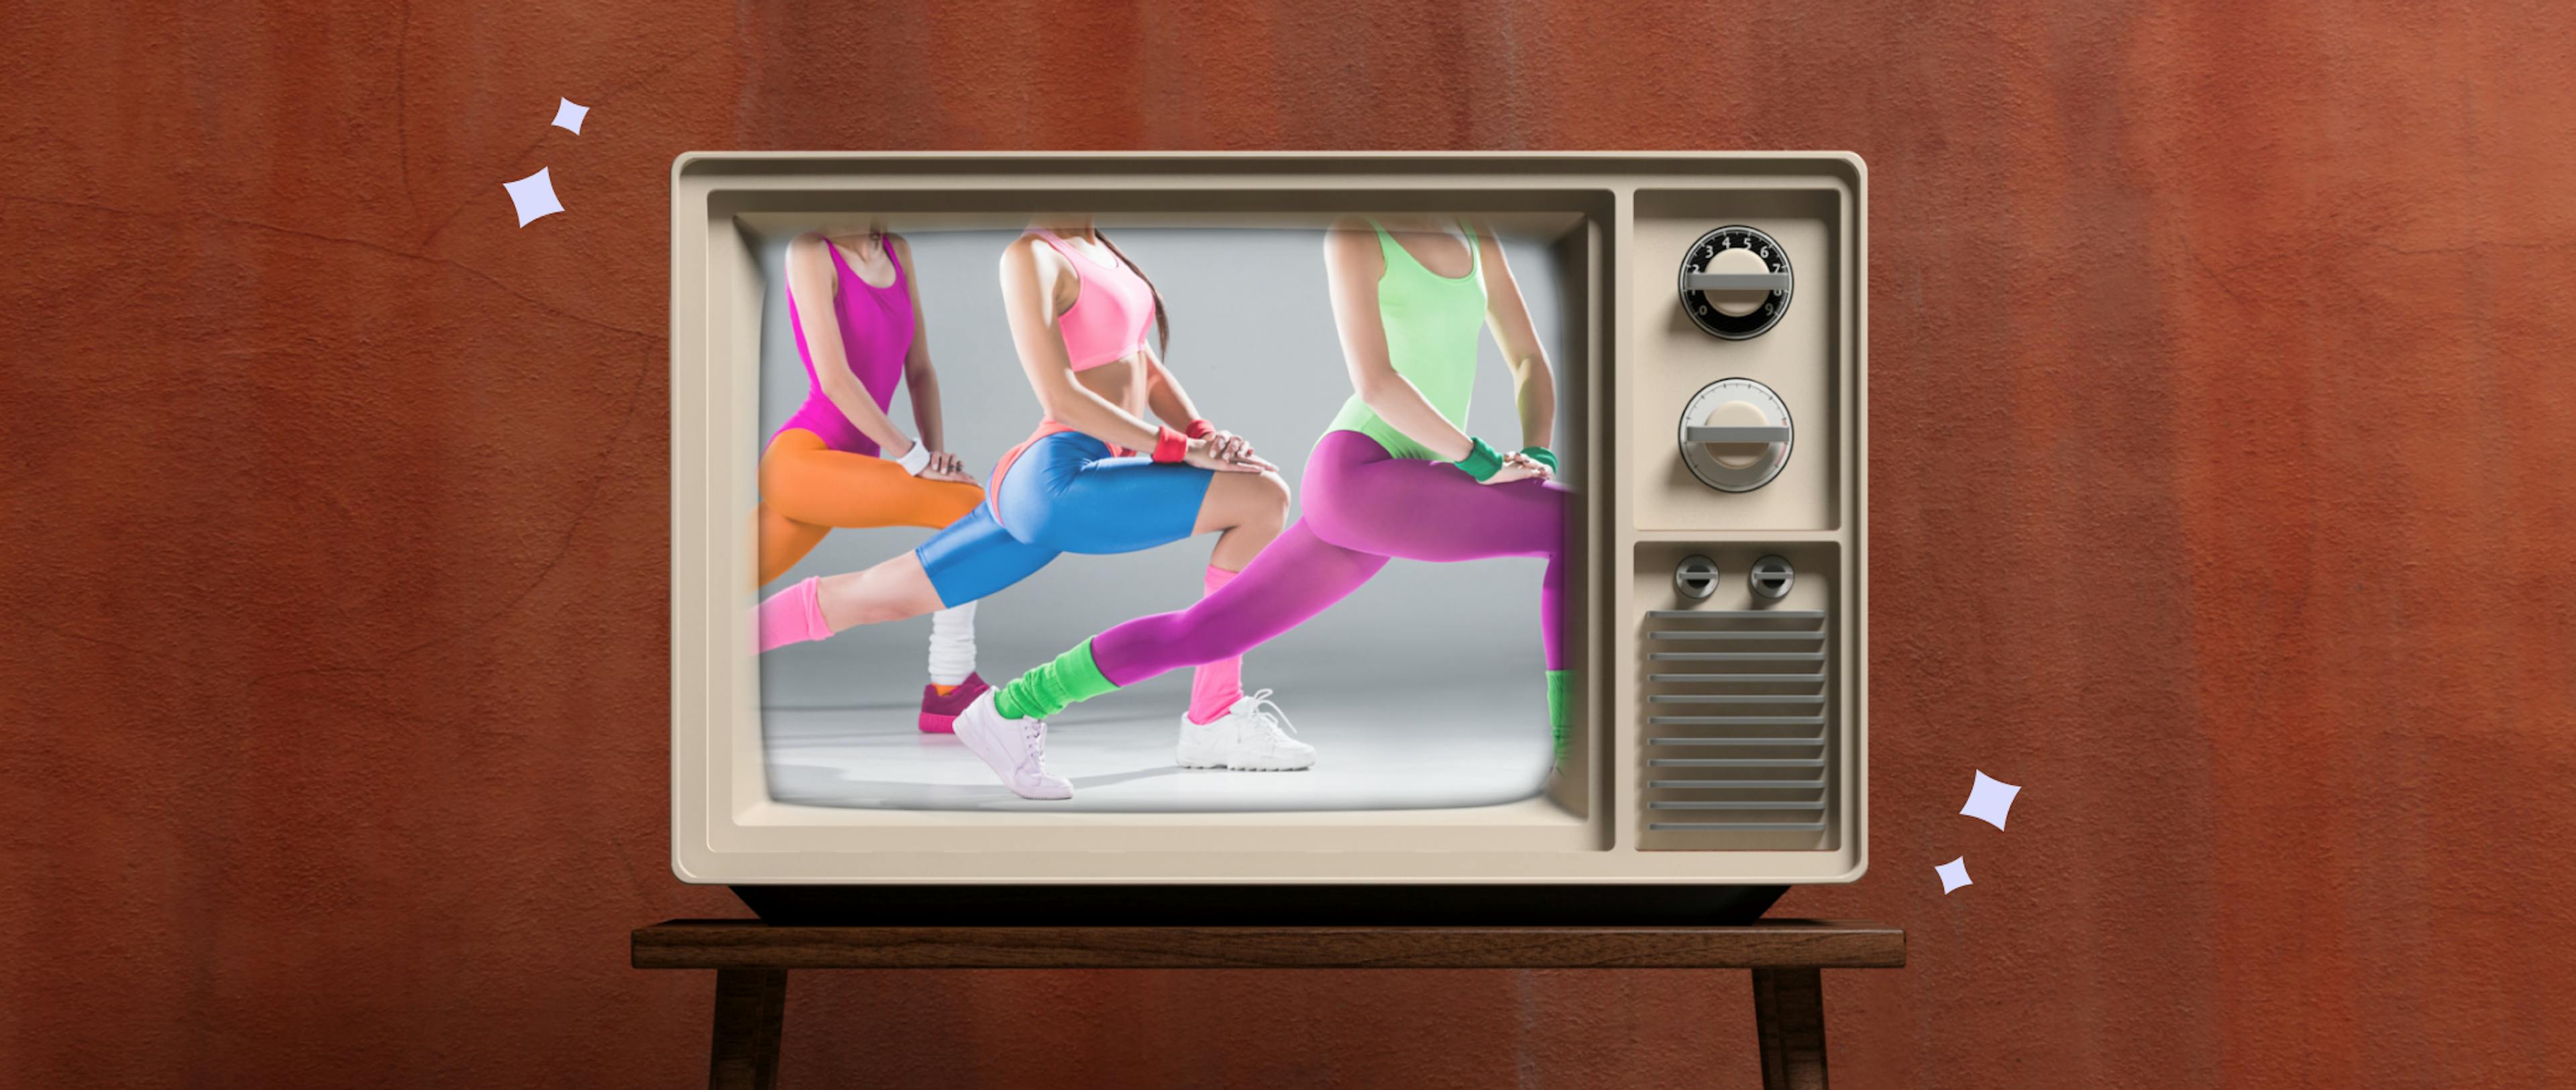 Television shows women doing aerobics.